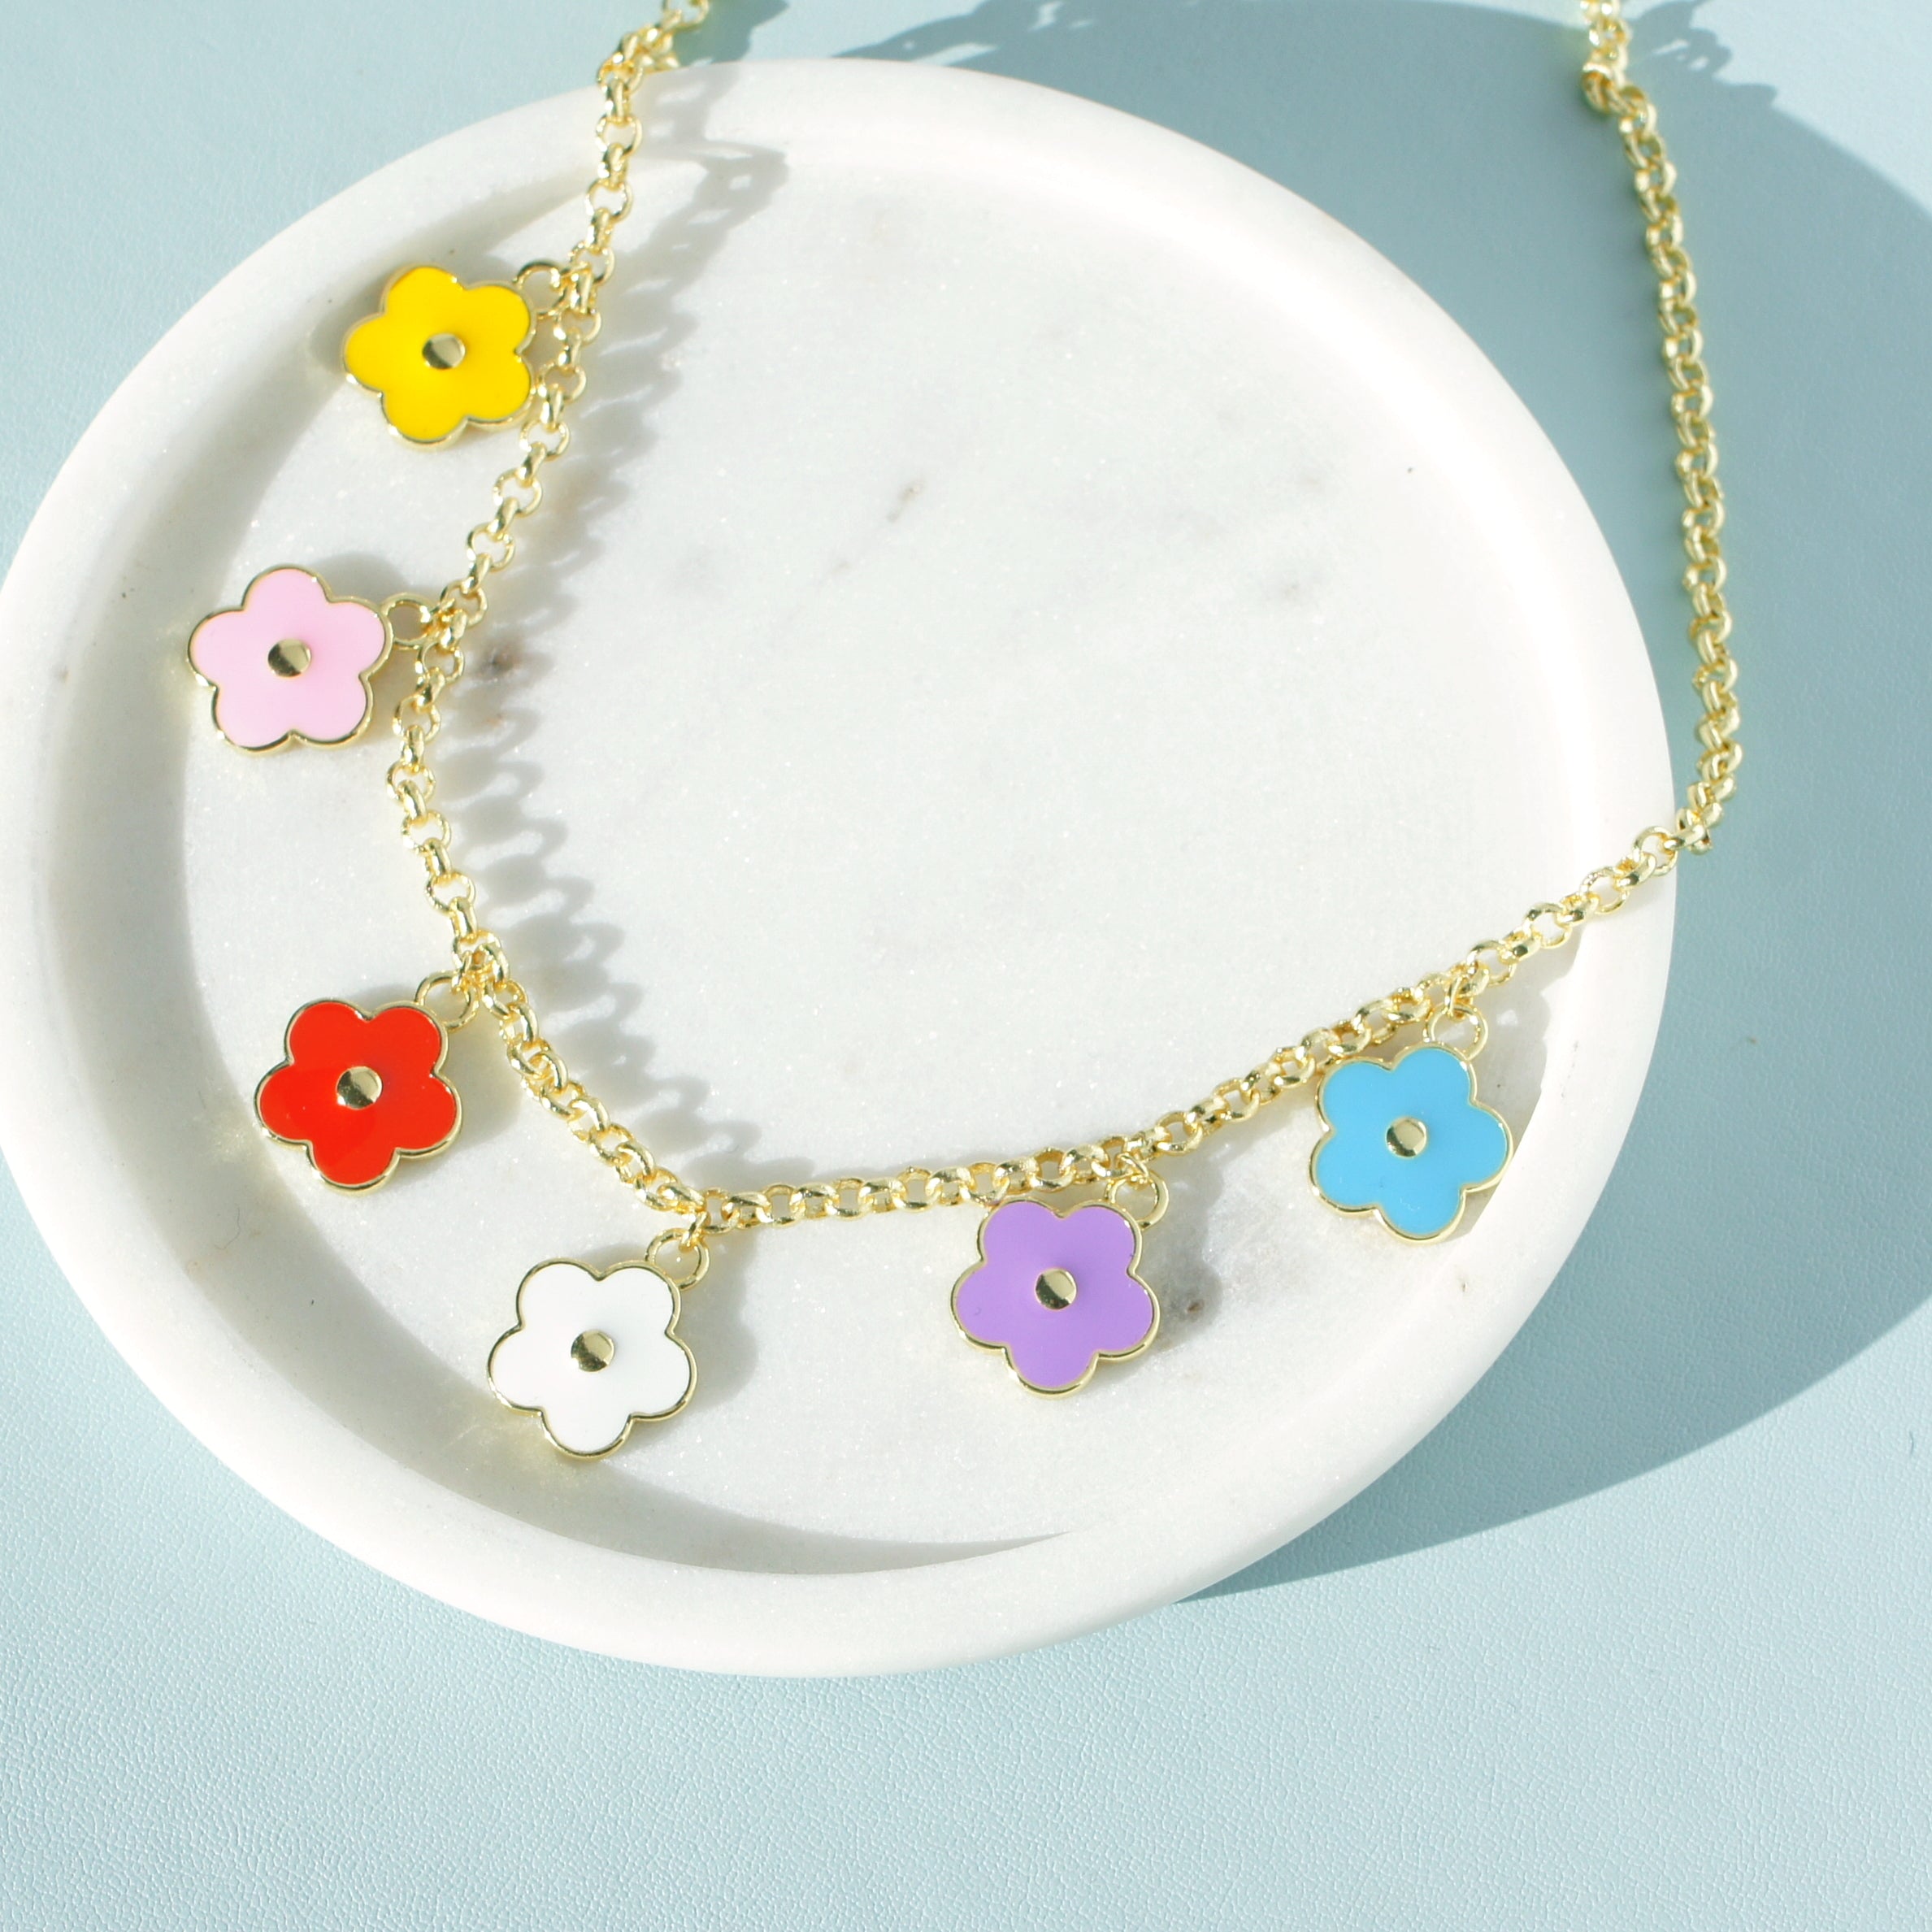 Flower Power Chain Bracelet with Enamel Flower Charms